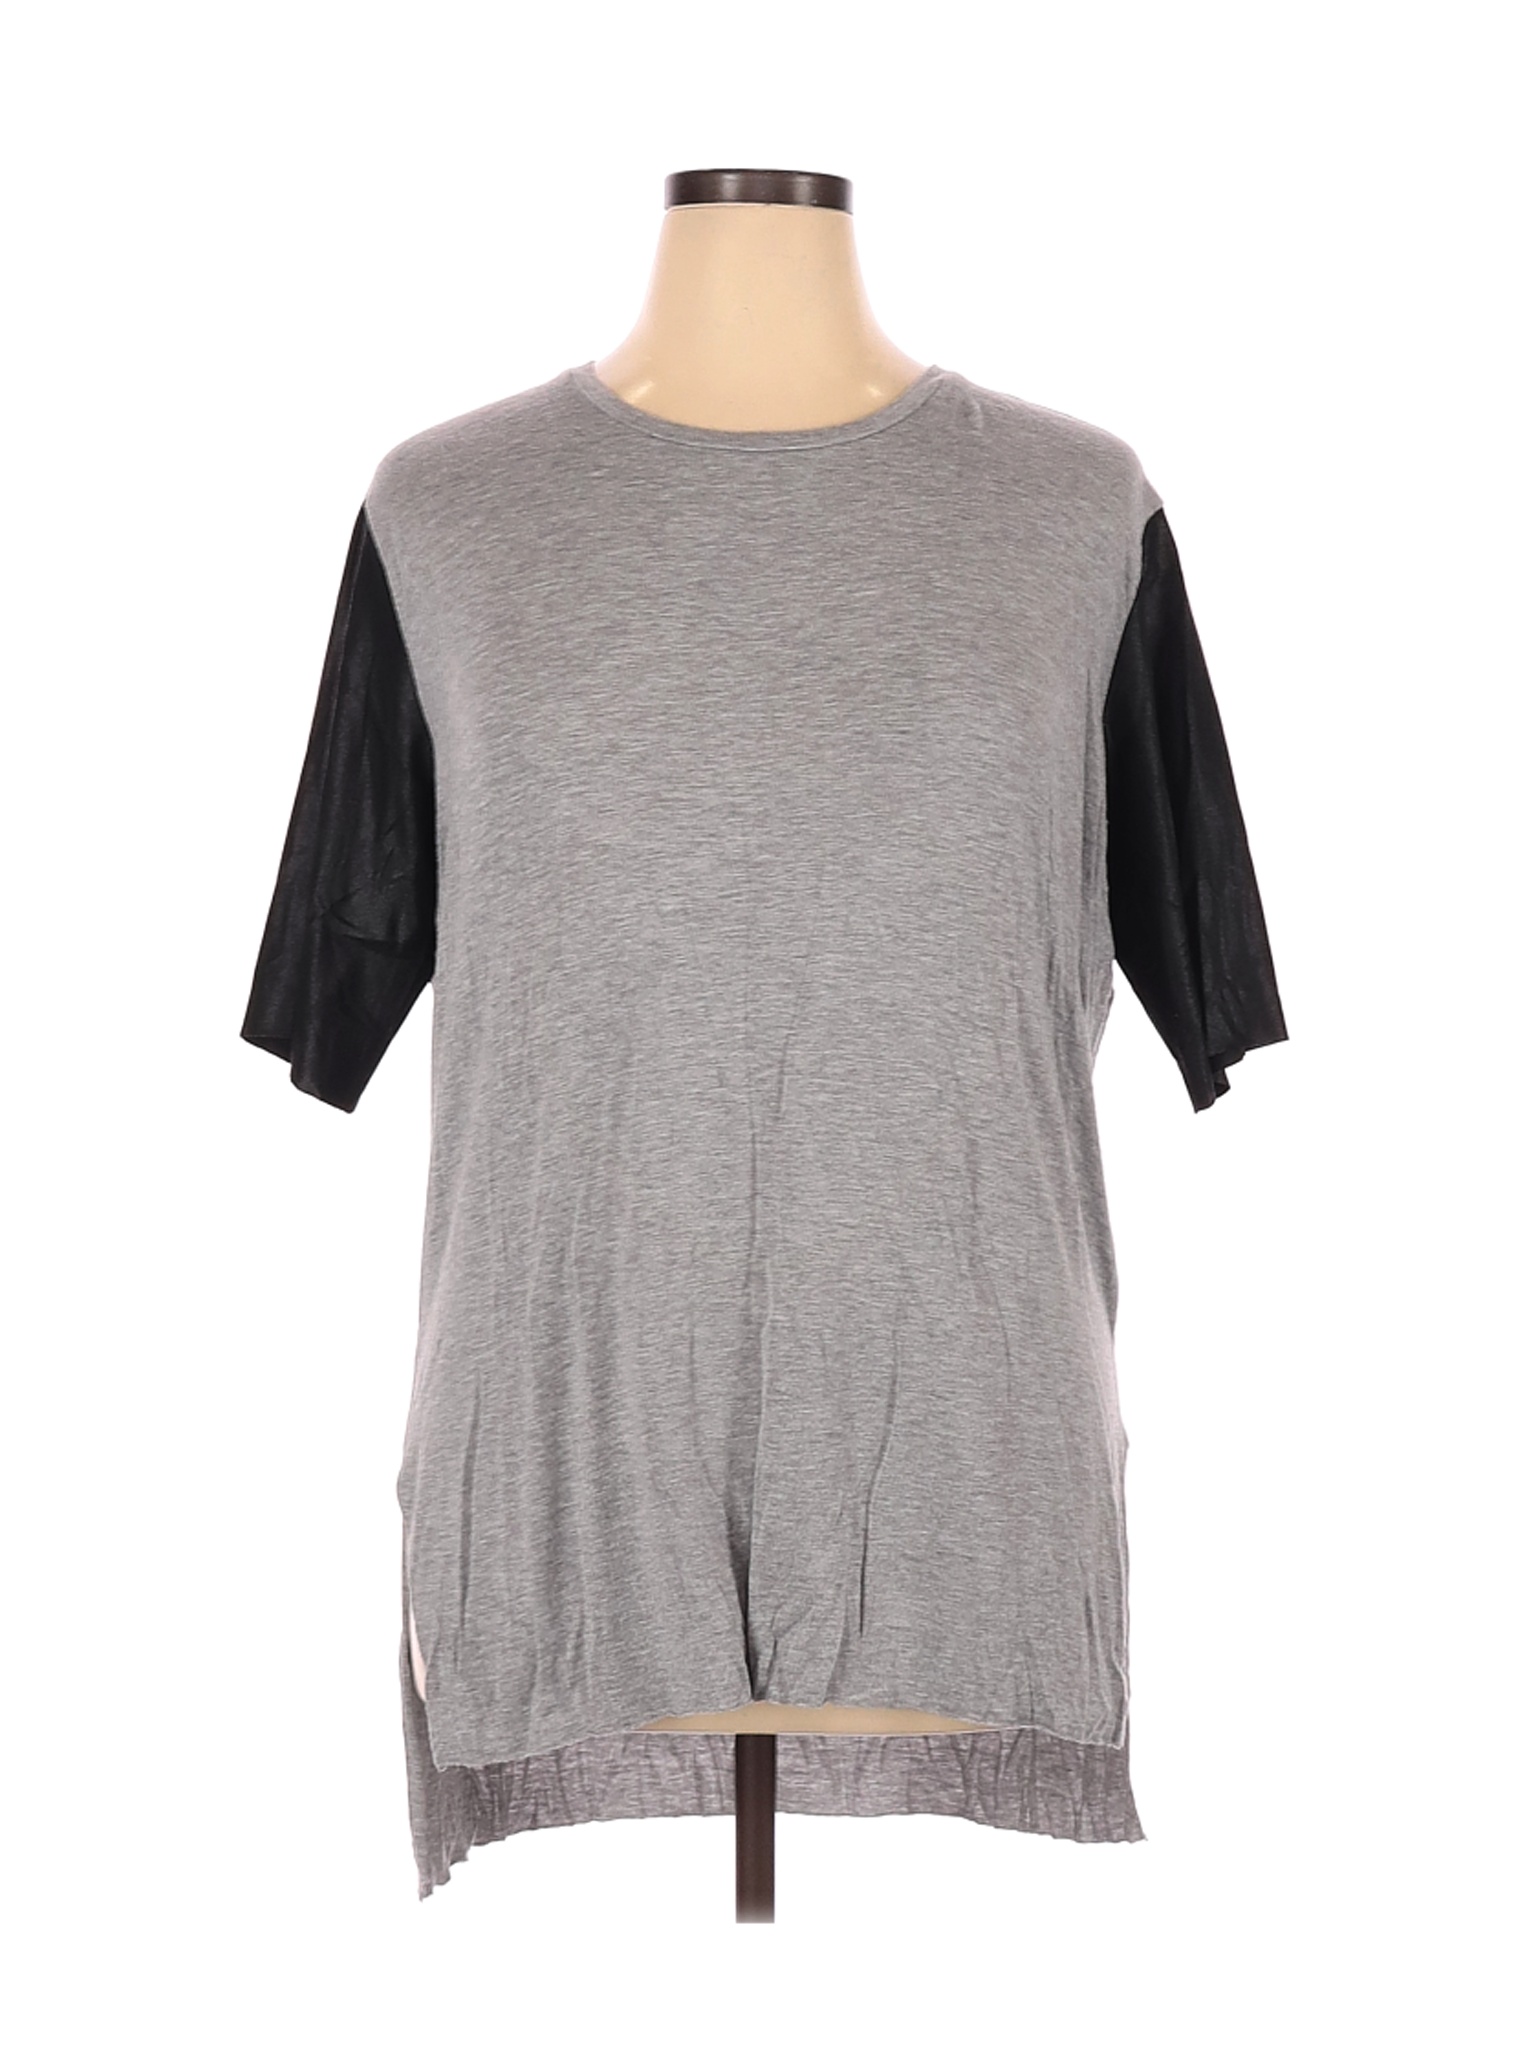 BCBGeneration Women Gray Short Sleeve T-Shirt L | eBay